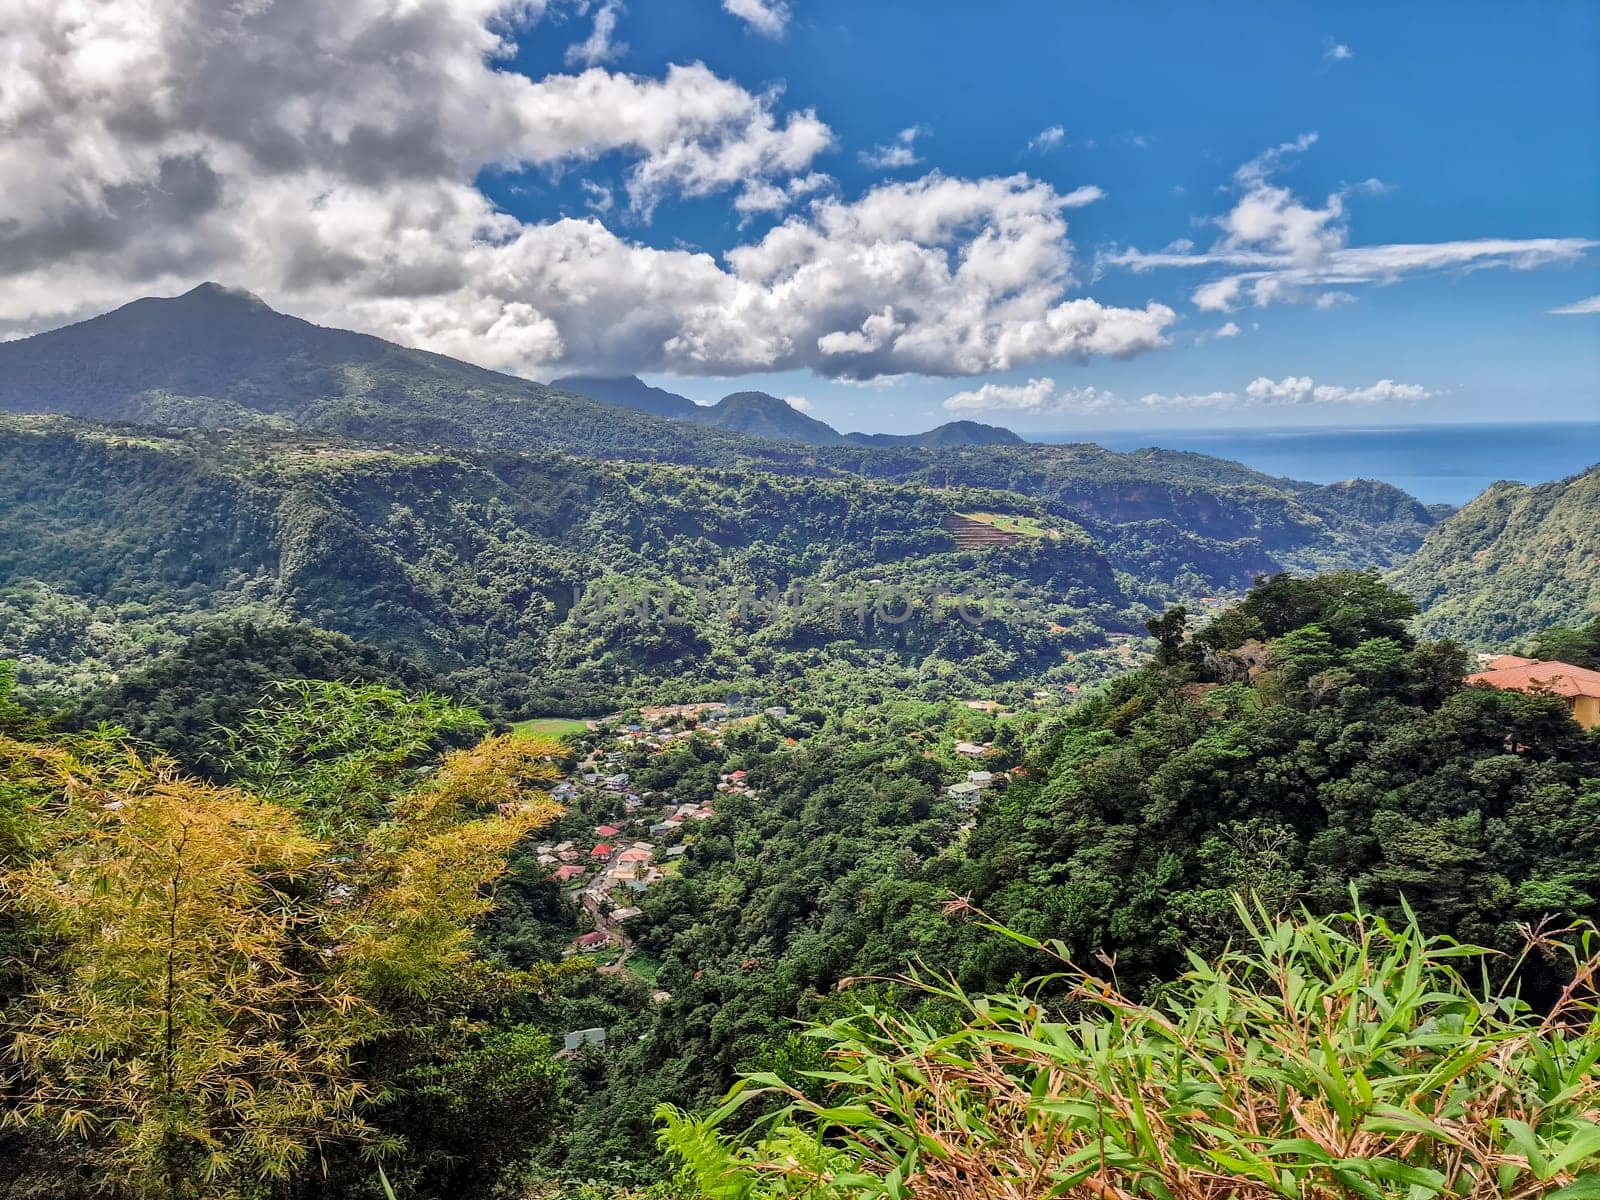 Travel reportage showing the lush, mountainous Caribbean hinterland countryside
